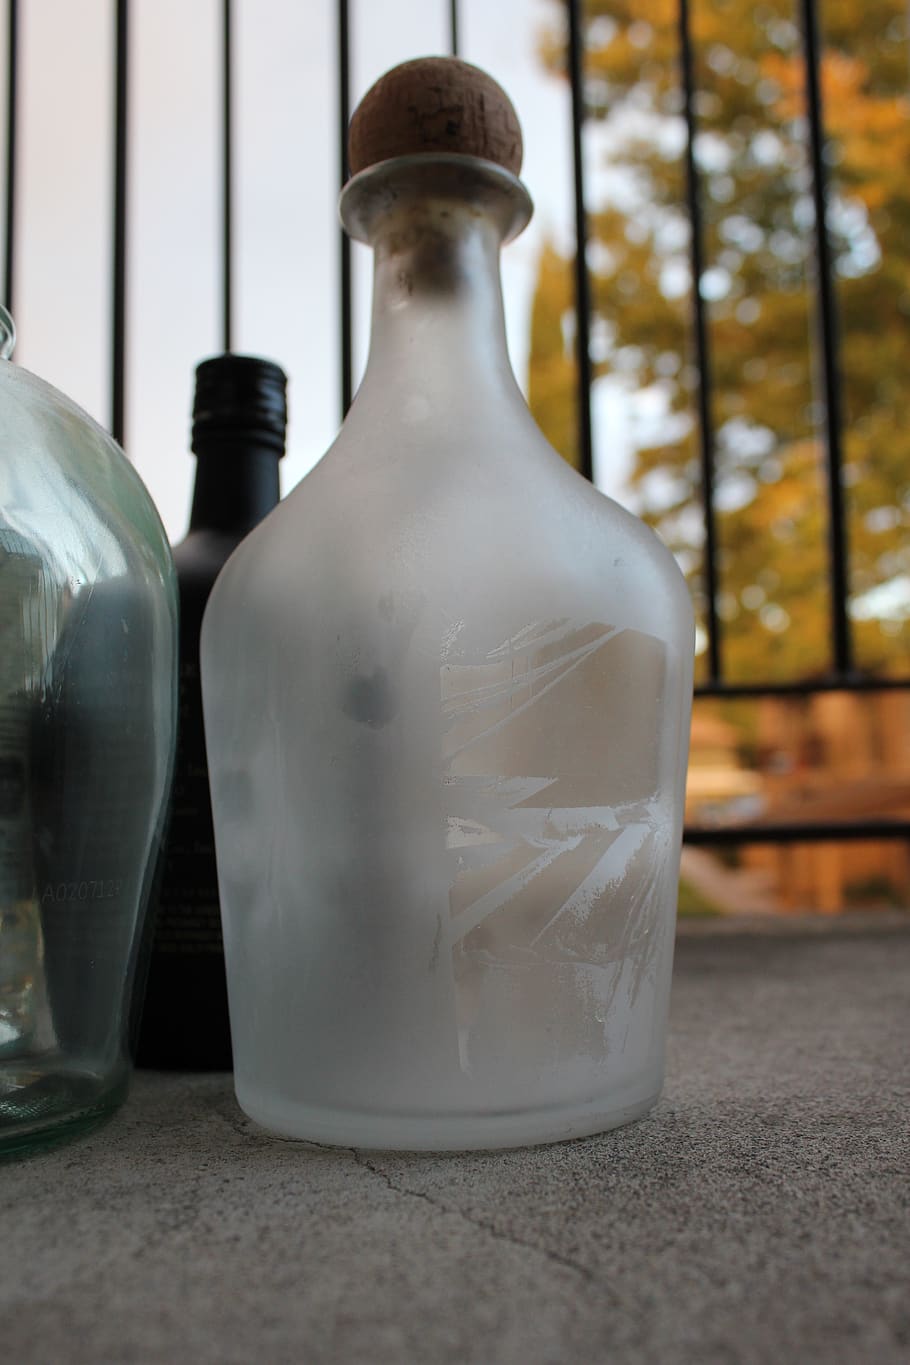 botella, corcho, alcohol, vino, bebidas, vidrio, botella de vino, vintage, antiguo, natural